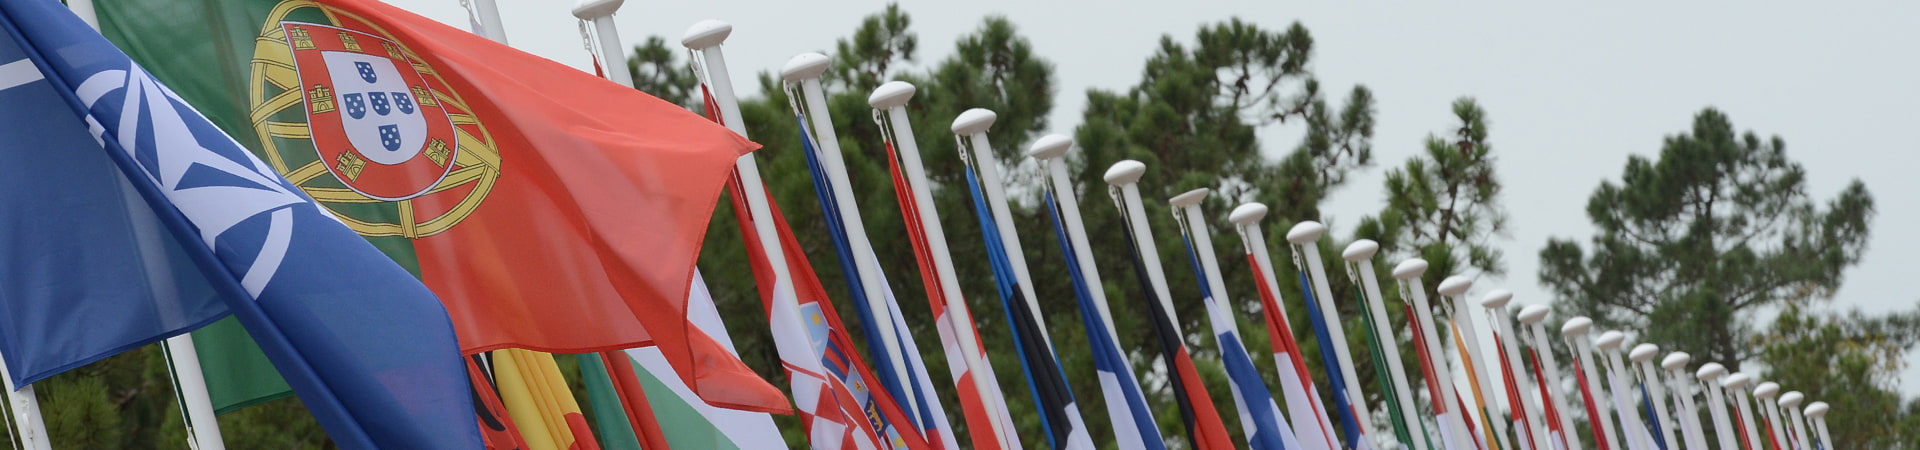 Imagem de bandeiras dos Países da NATO